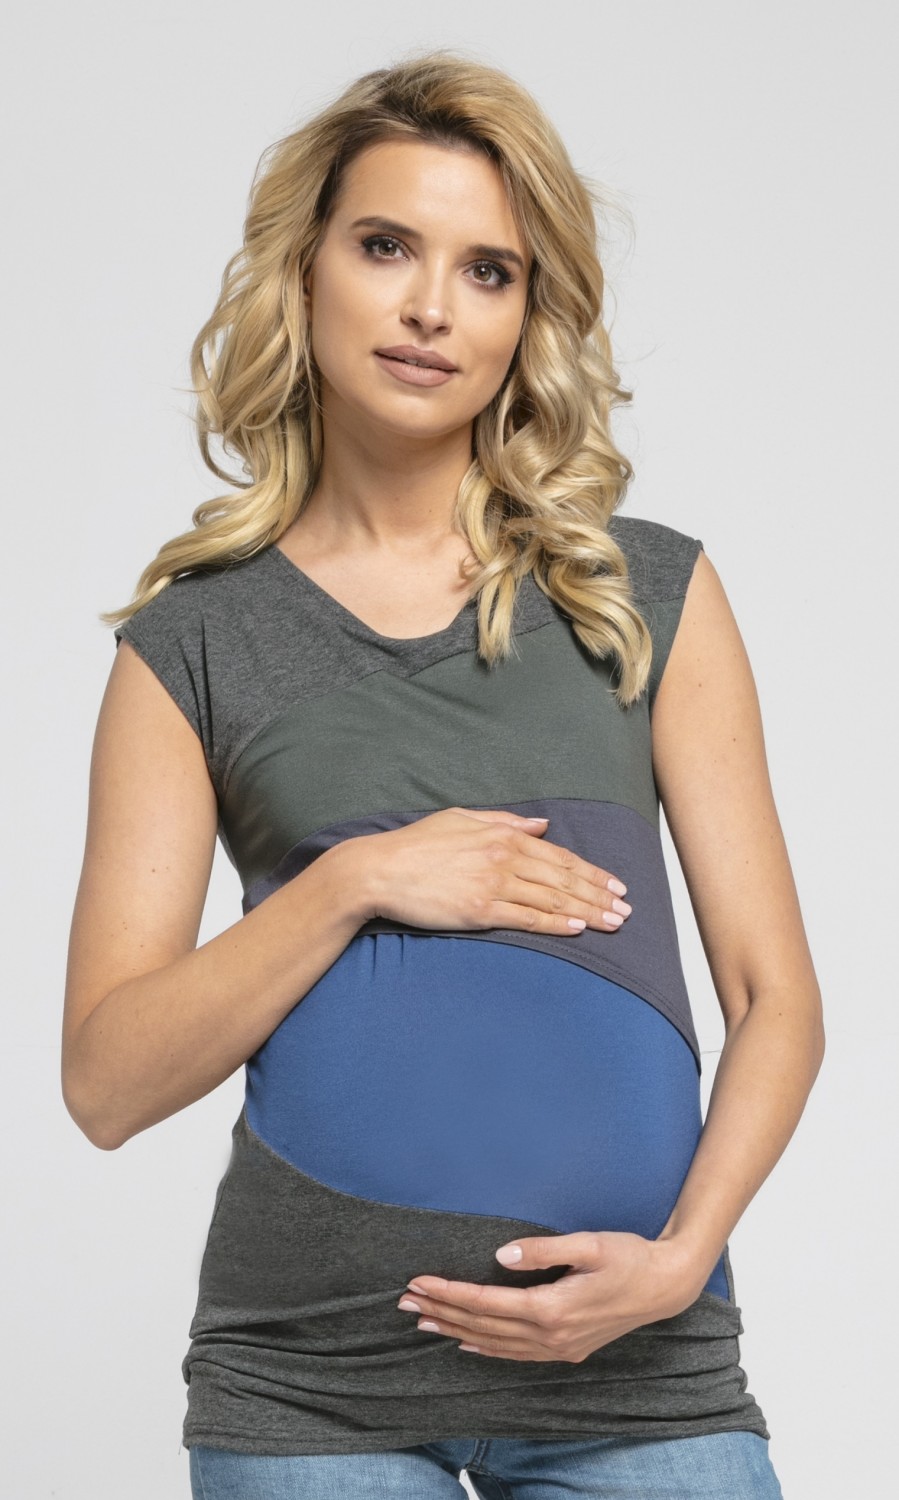 369p Happy Mama Women's Nursing Double Layer Top Colour Block Design Pregnancy